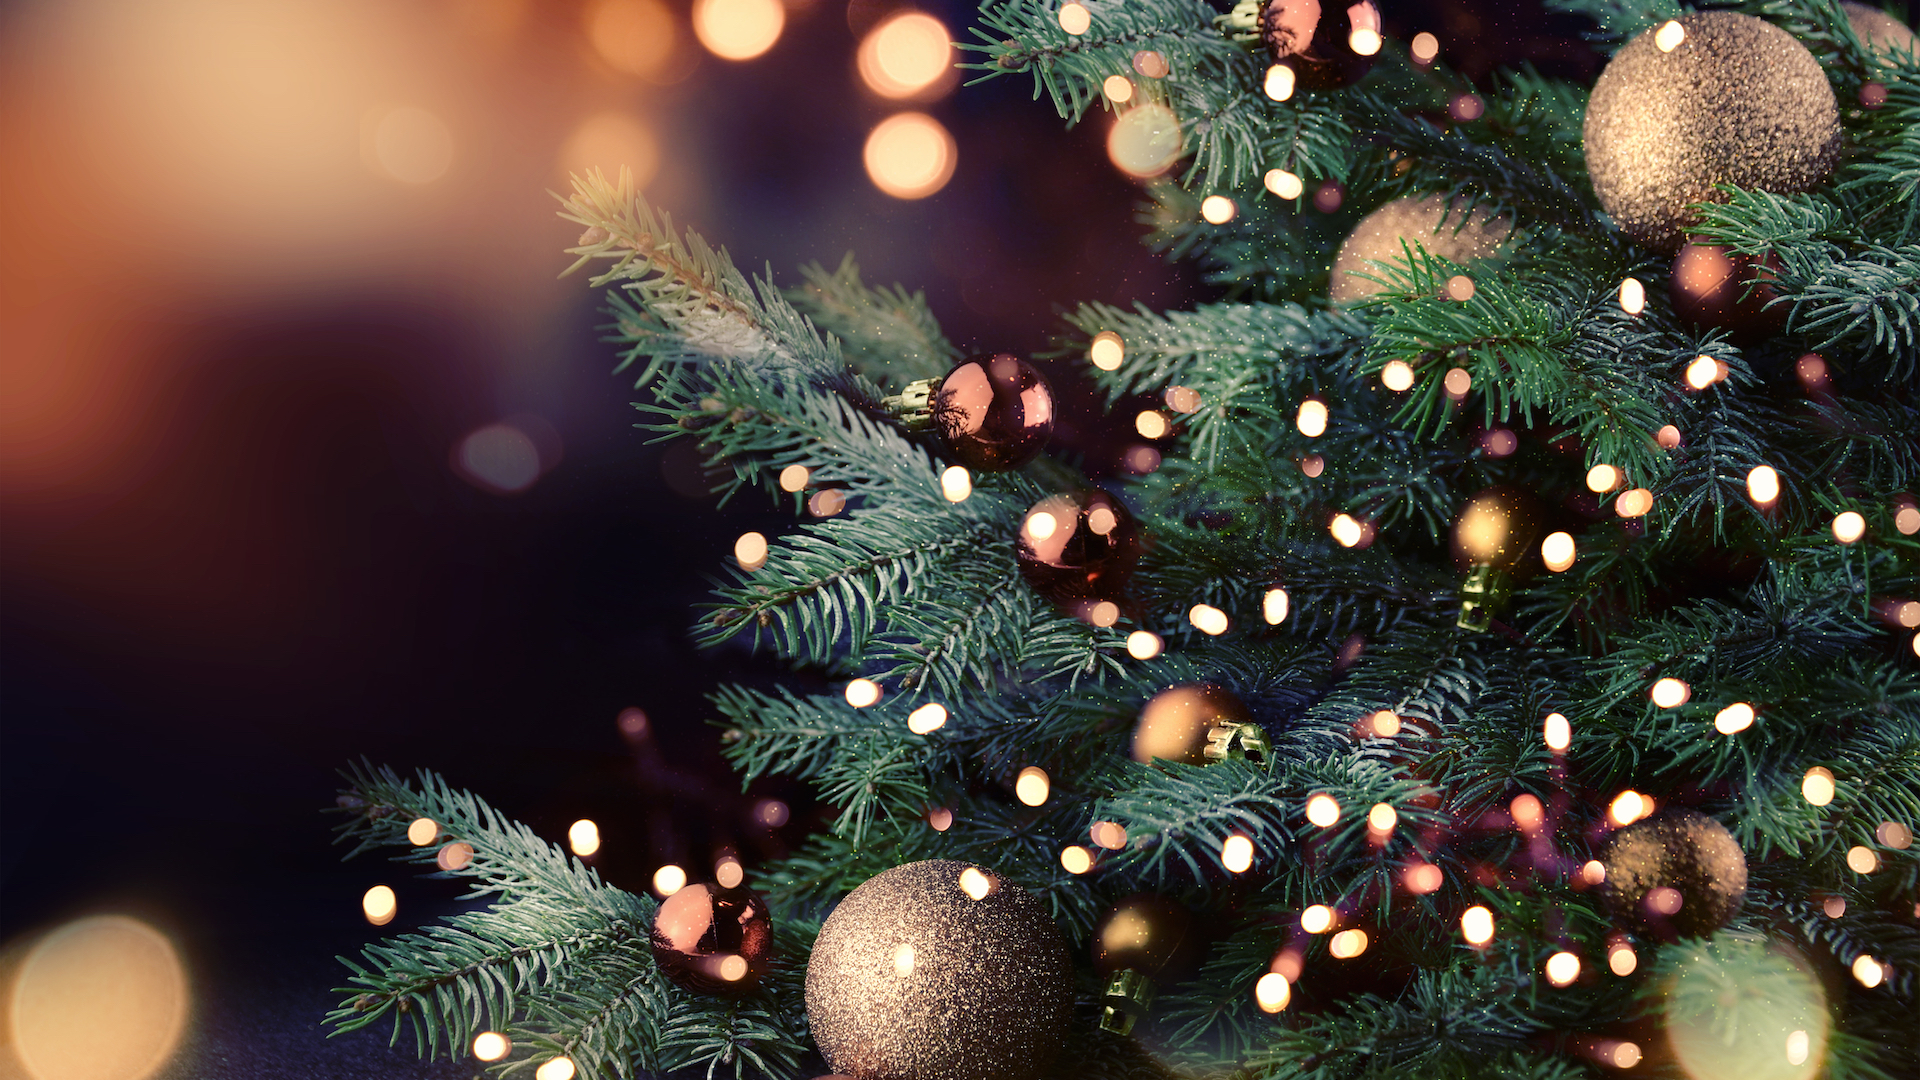 A twinkling Christmas tree